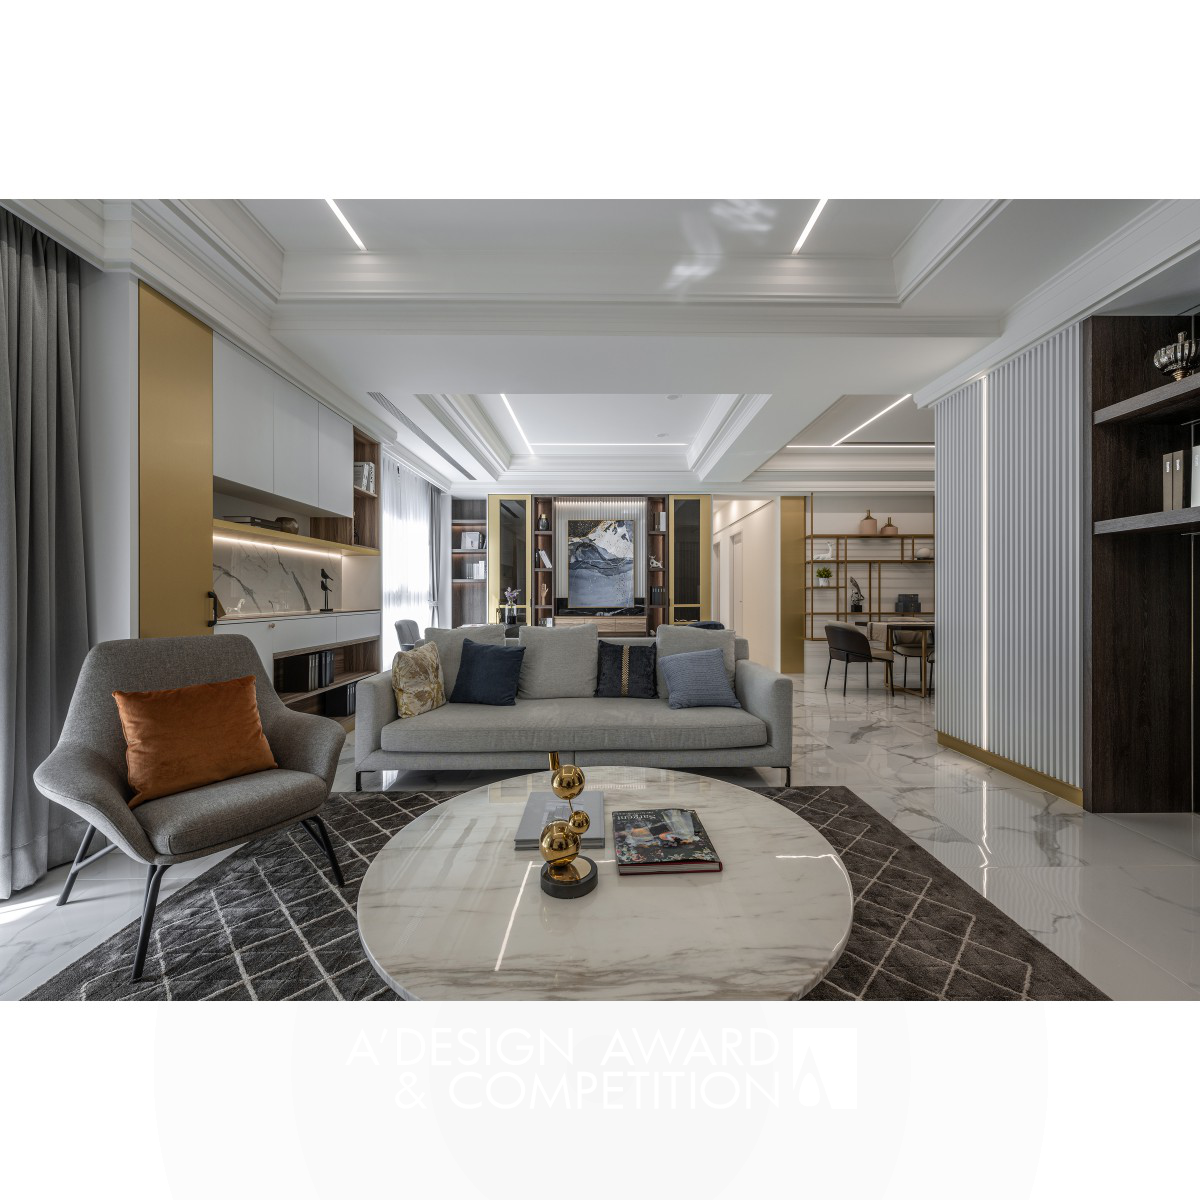 Exclusive Privilege Residence by Chiun Ju interior design